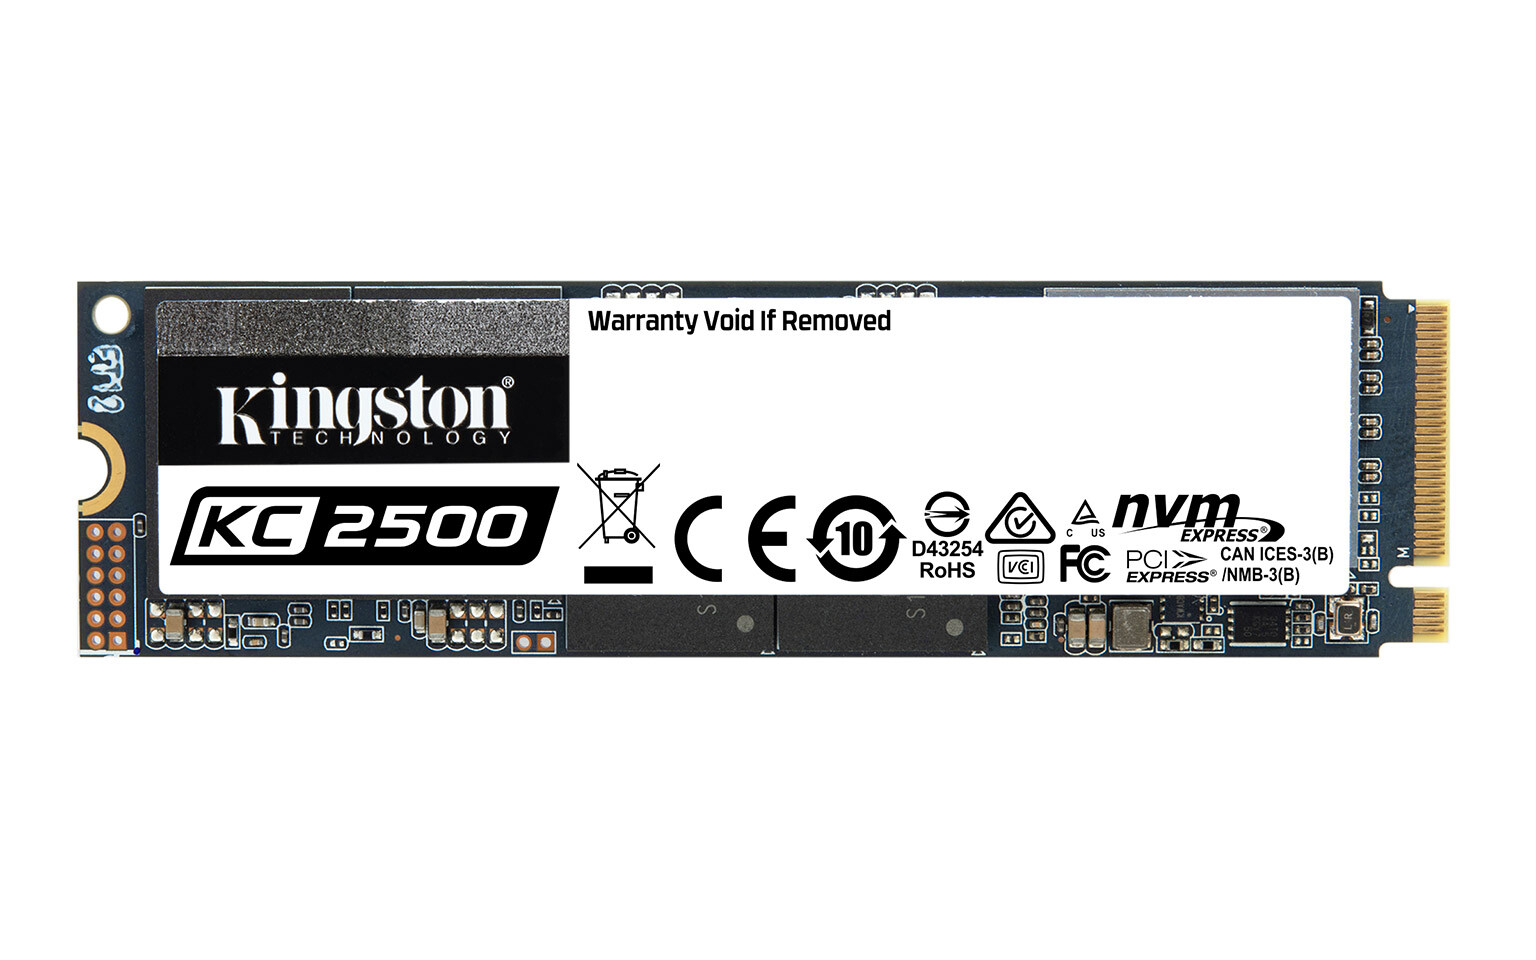 Kingston Releases Next-Gen KC2500 NVMe PCIe SSD | TechPowerUp